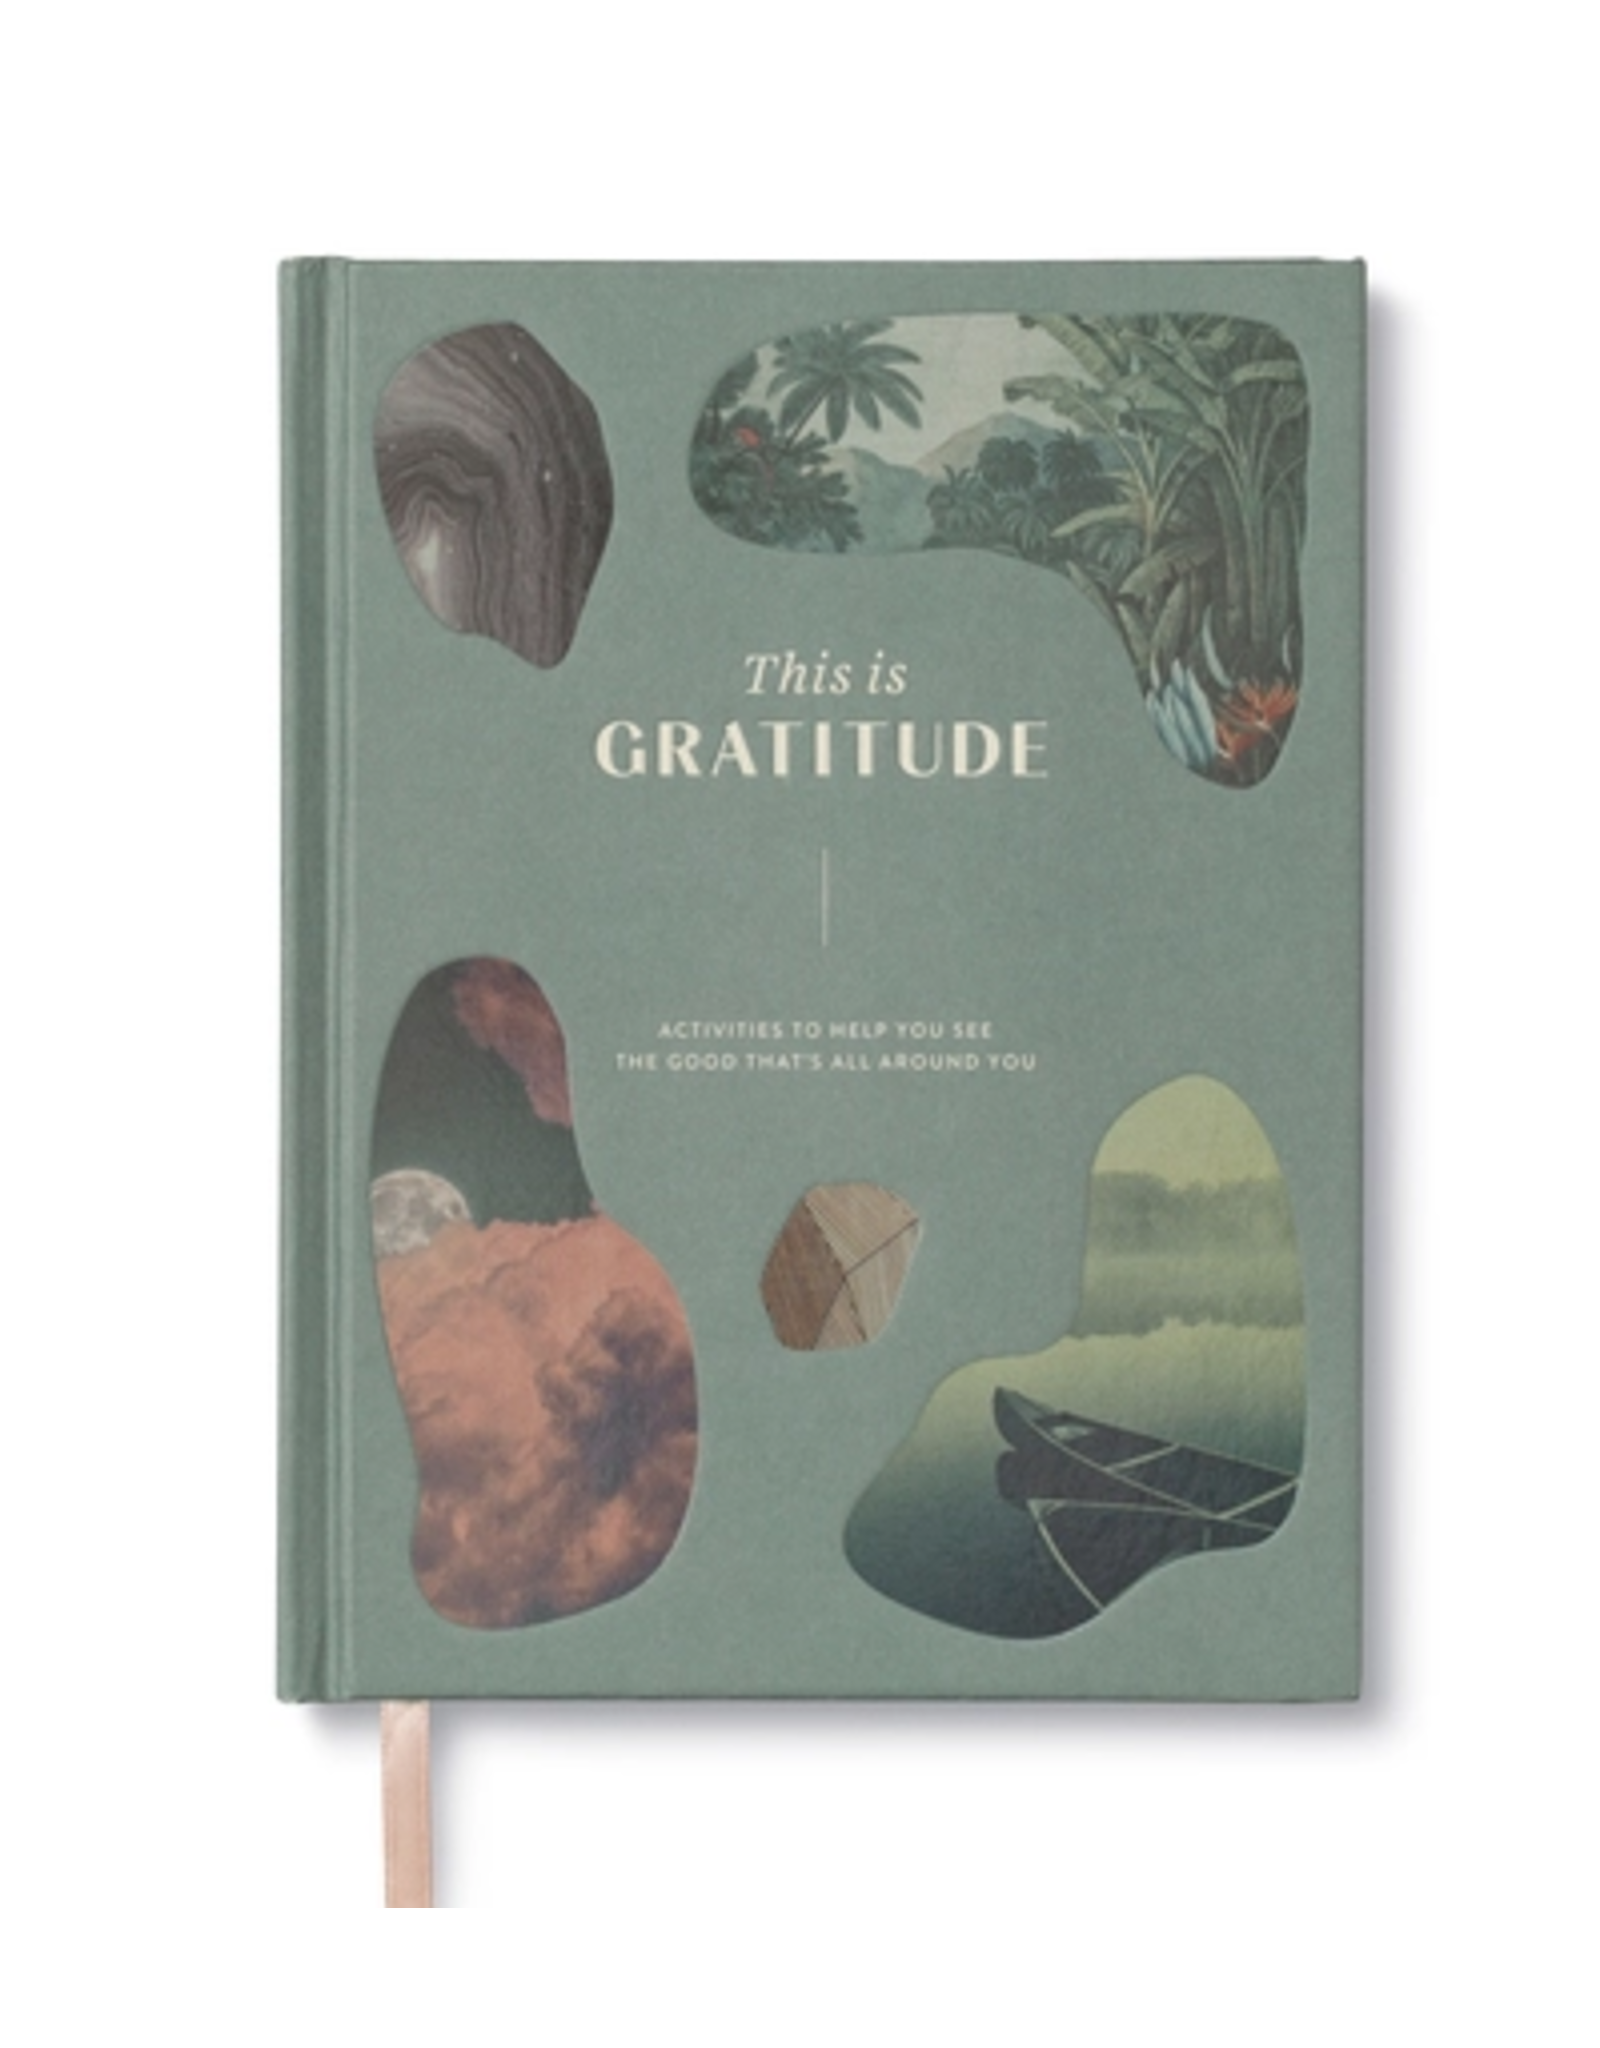 Compendium, Inc. This is Gratitude guided journal